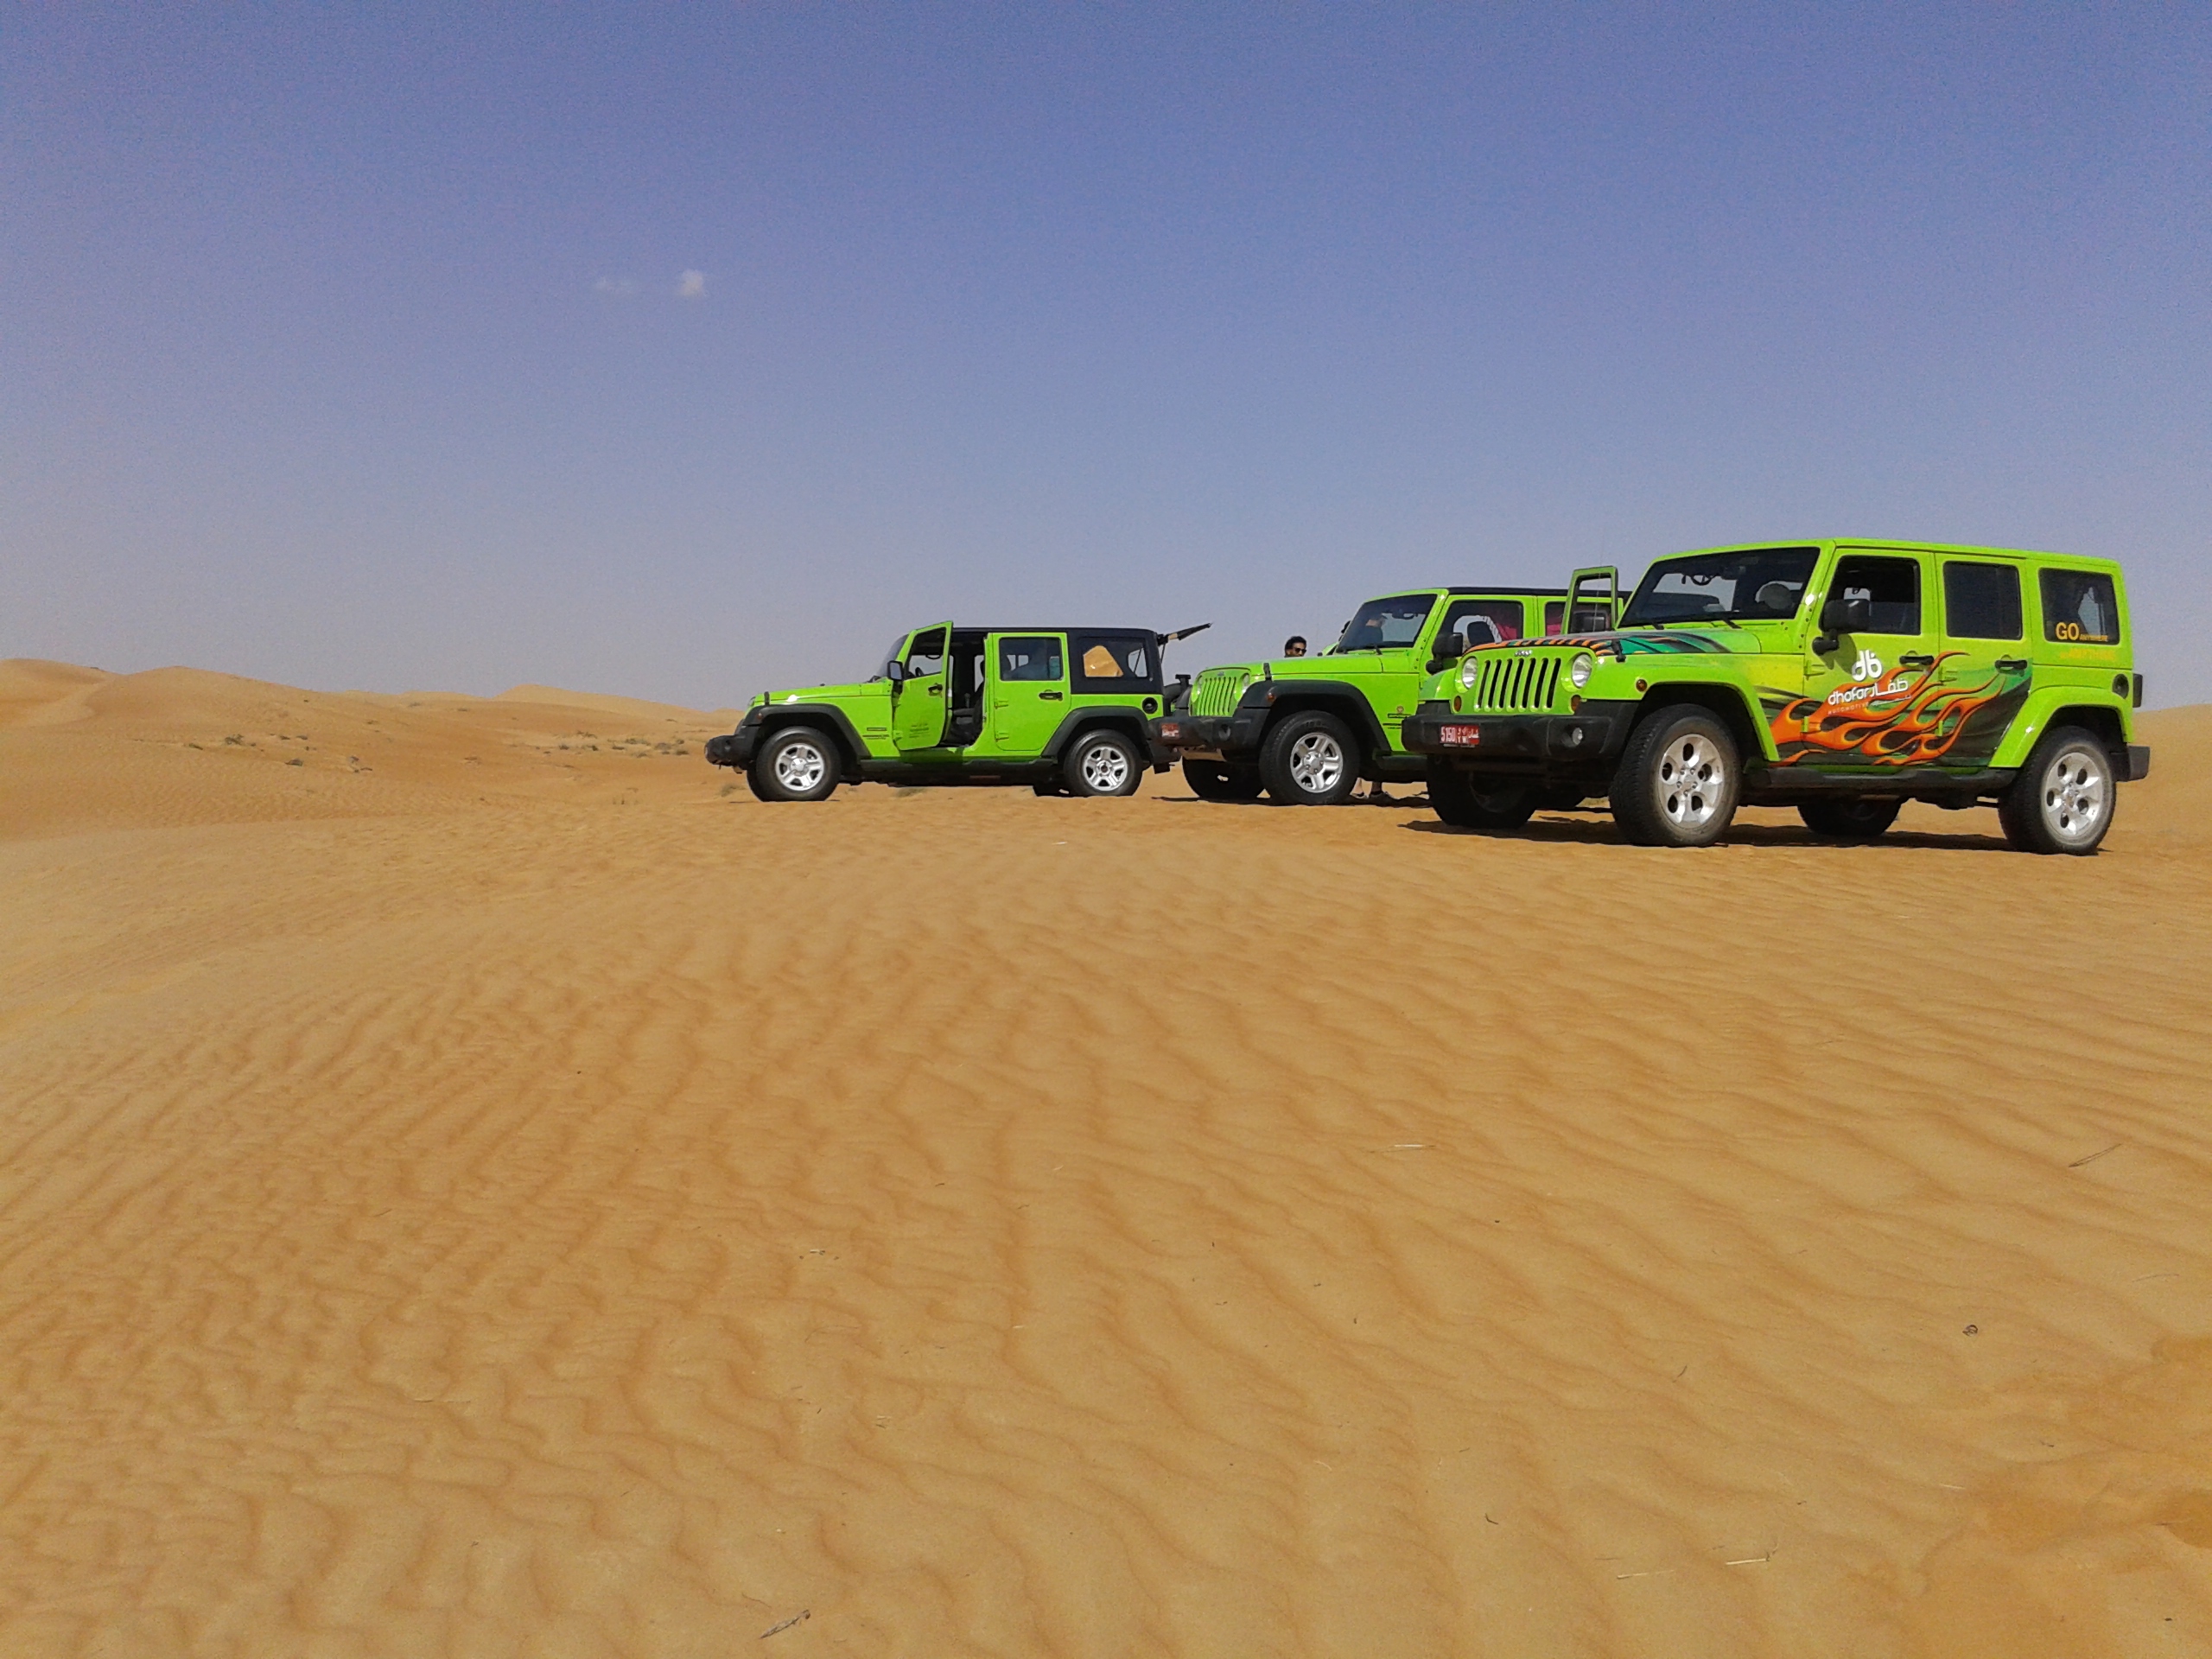 Driving on Oman's dunes